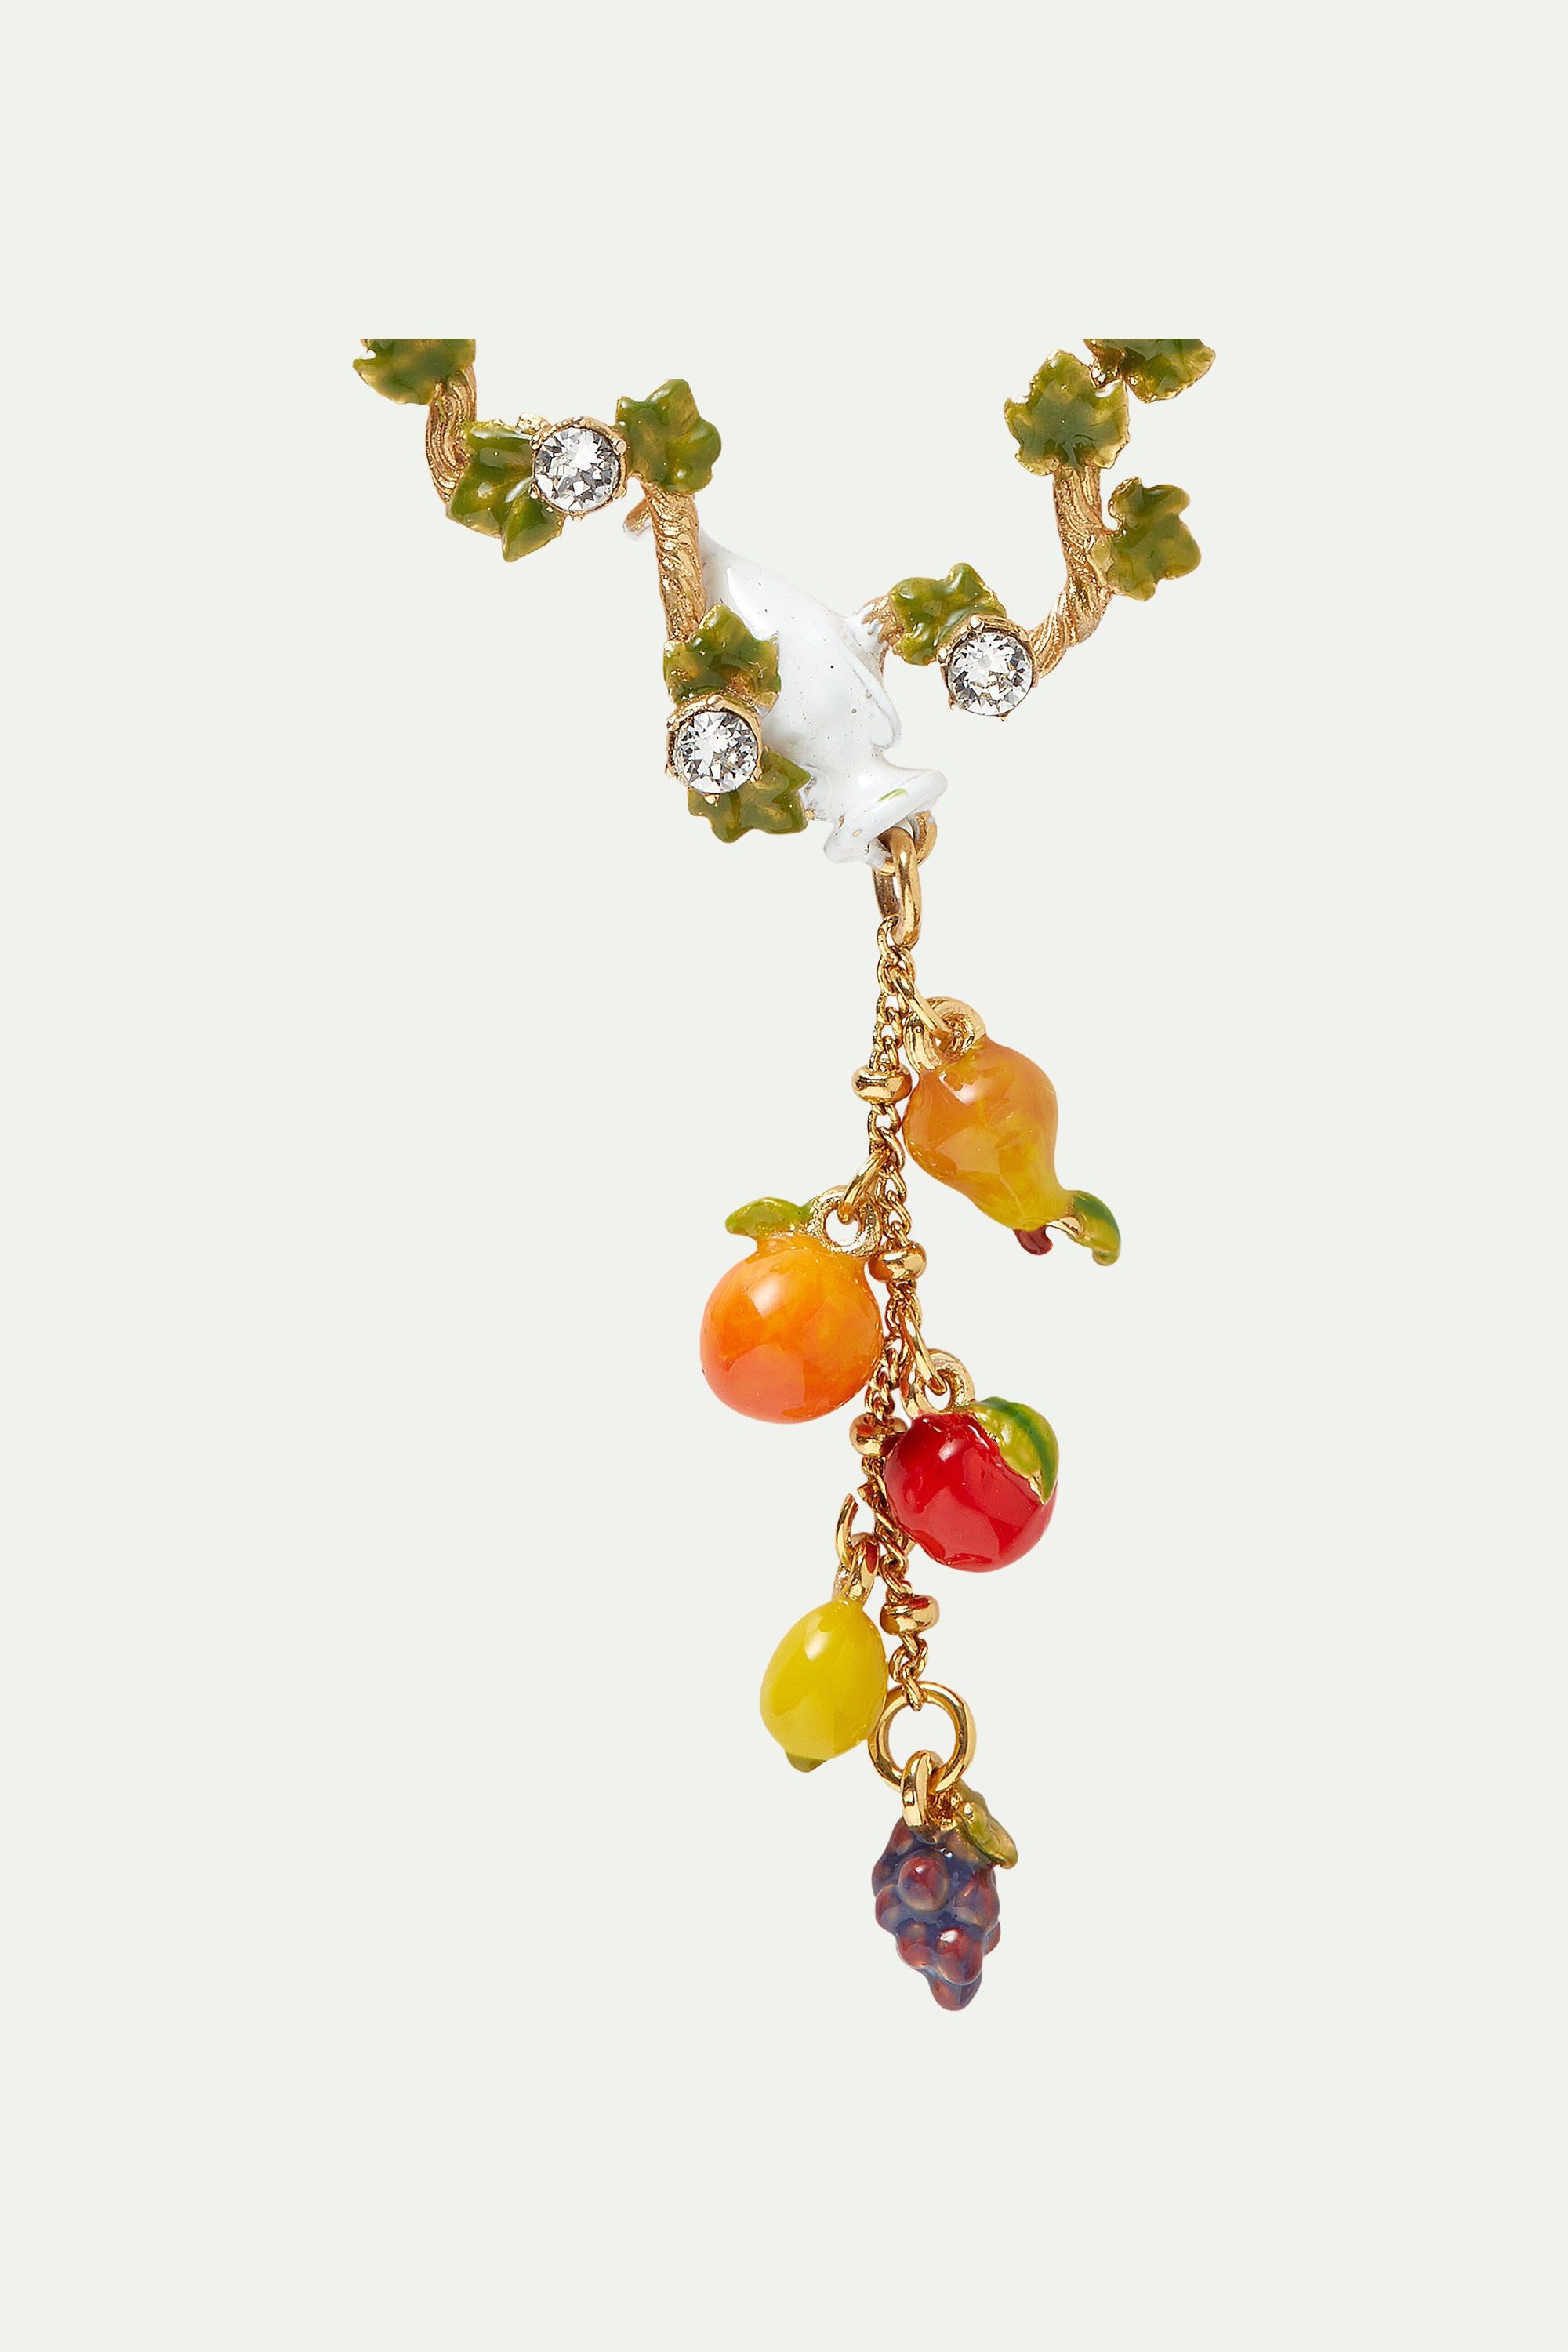 Amphora, vine leaves and fruit pendant necklace